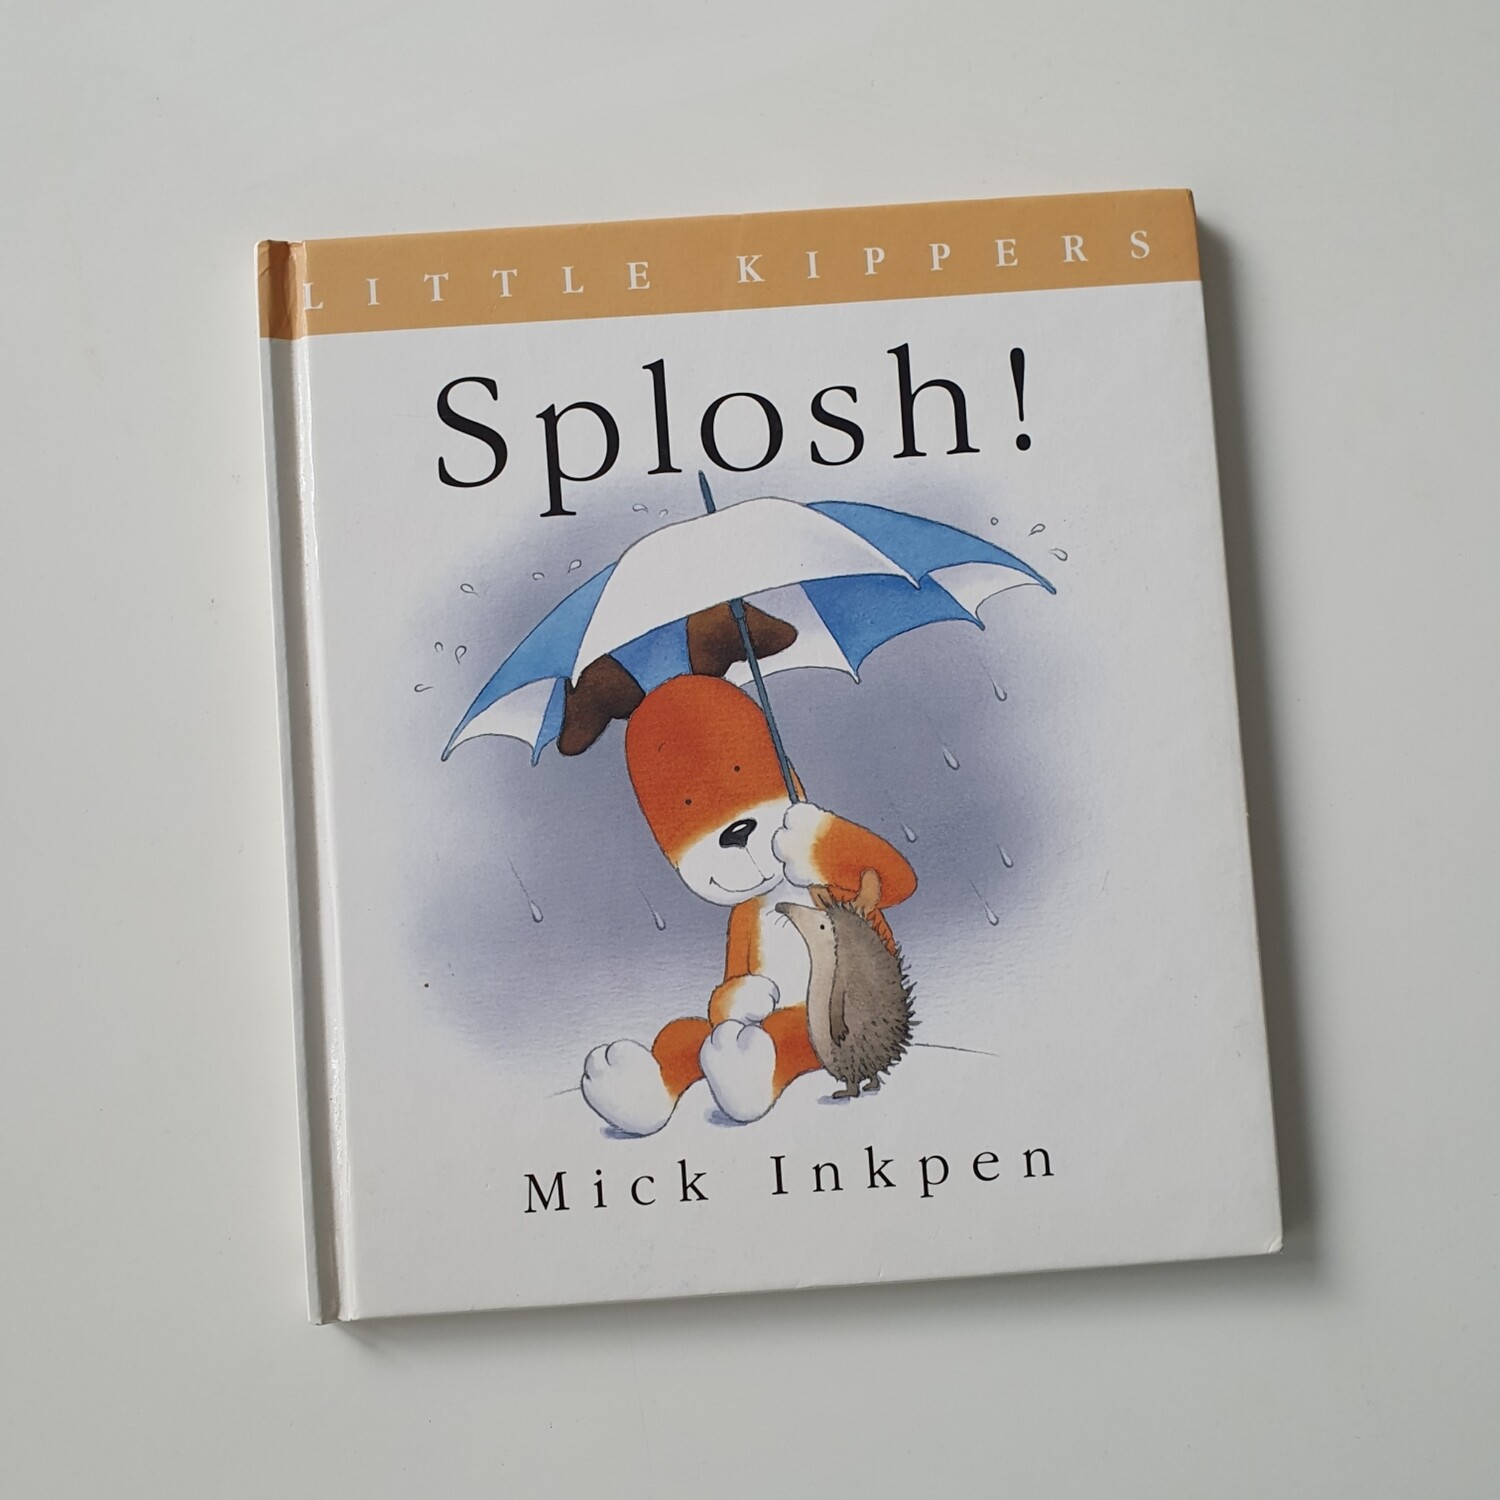 Splosh - Kipper the dog, hedgehog, rain, umbrella